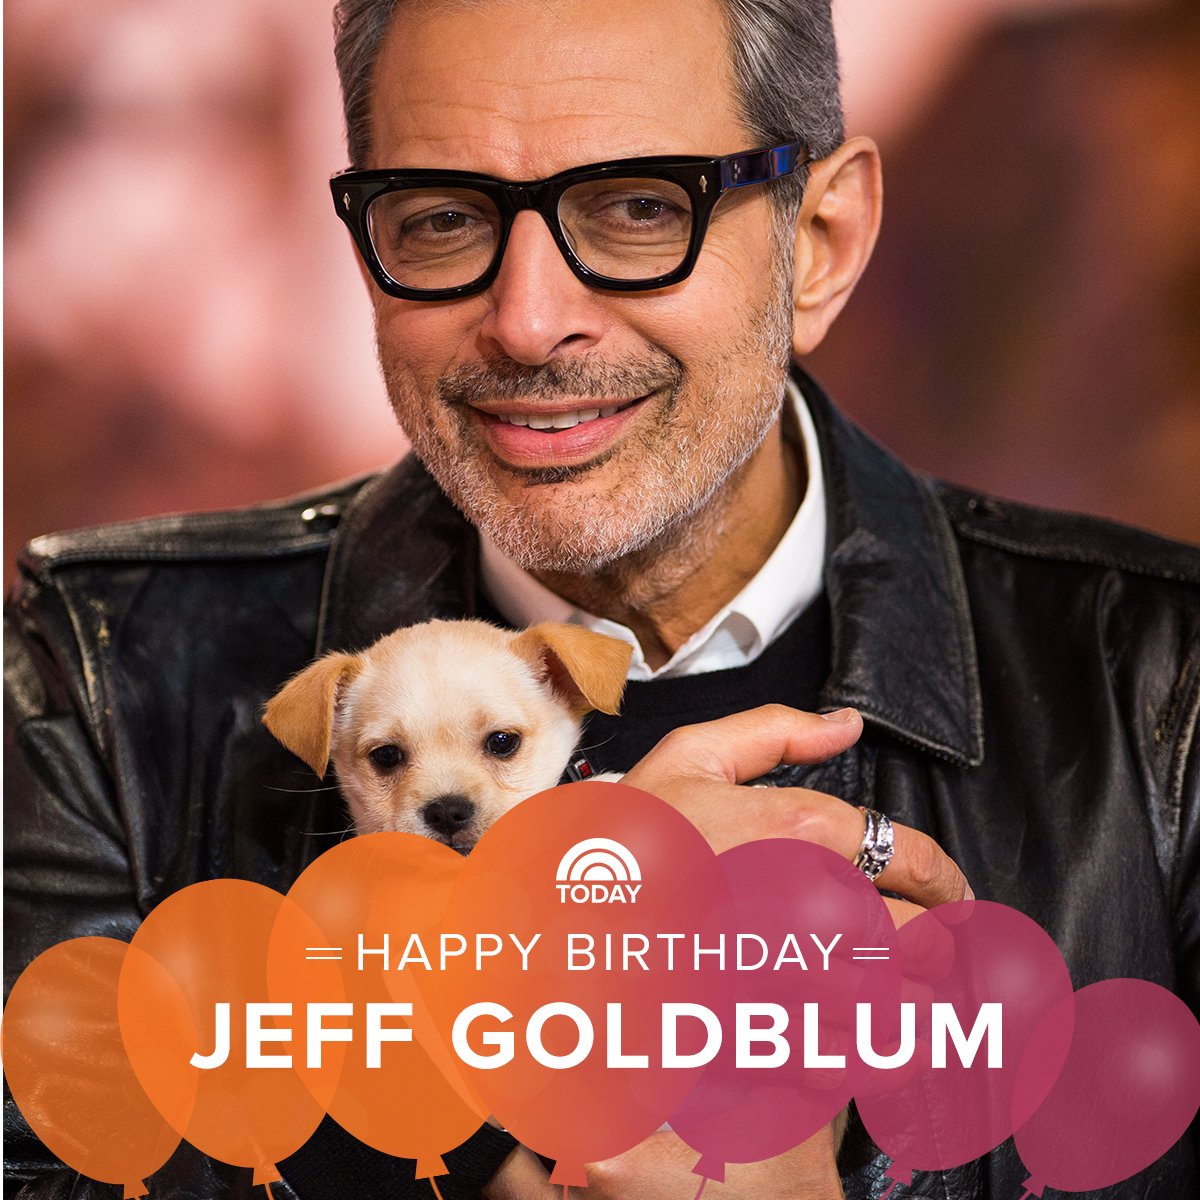 Happy birthday, Jeff Goldblum! 